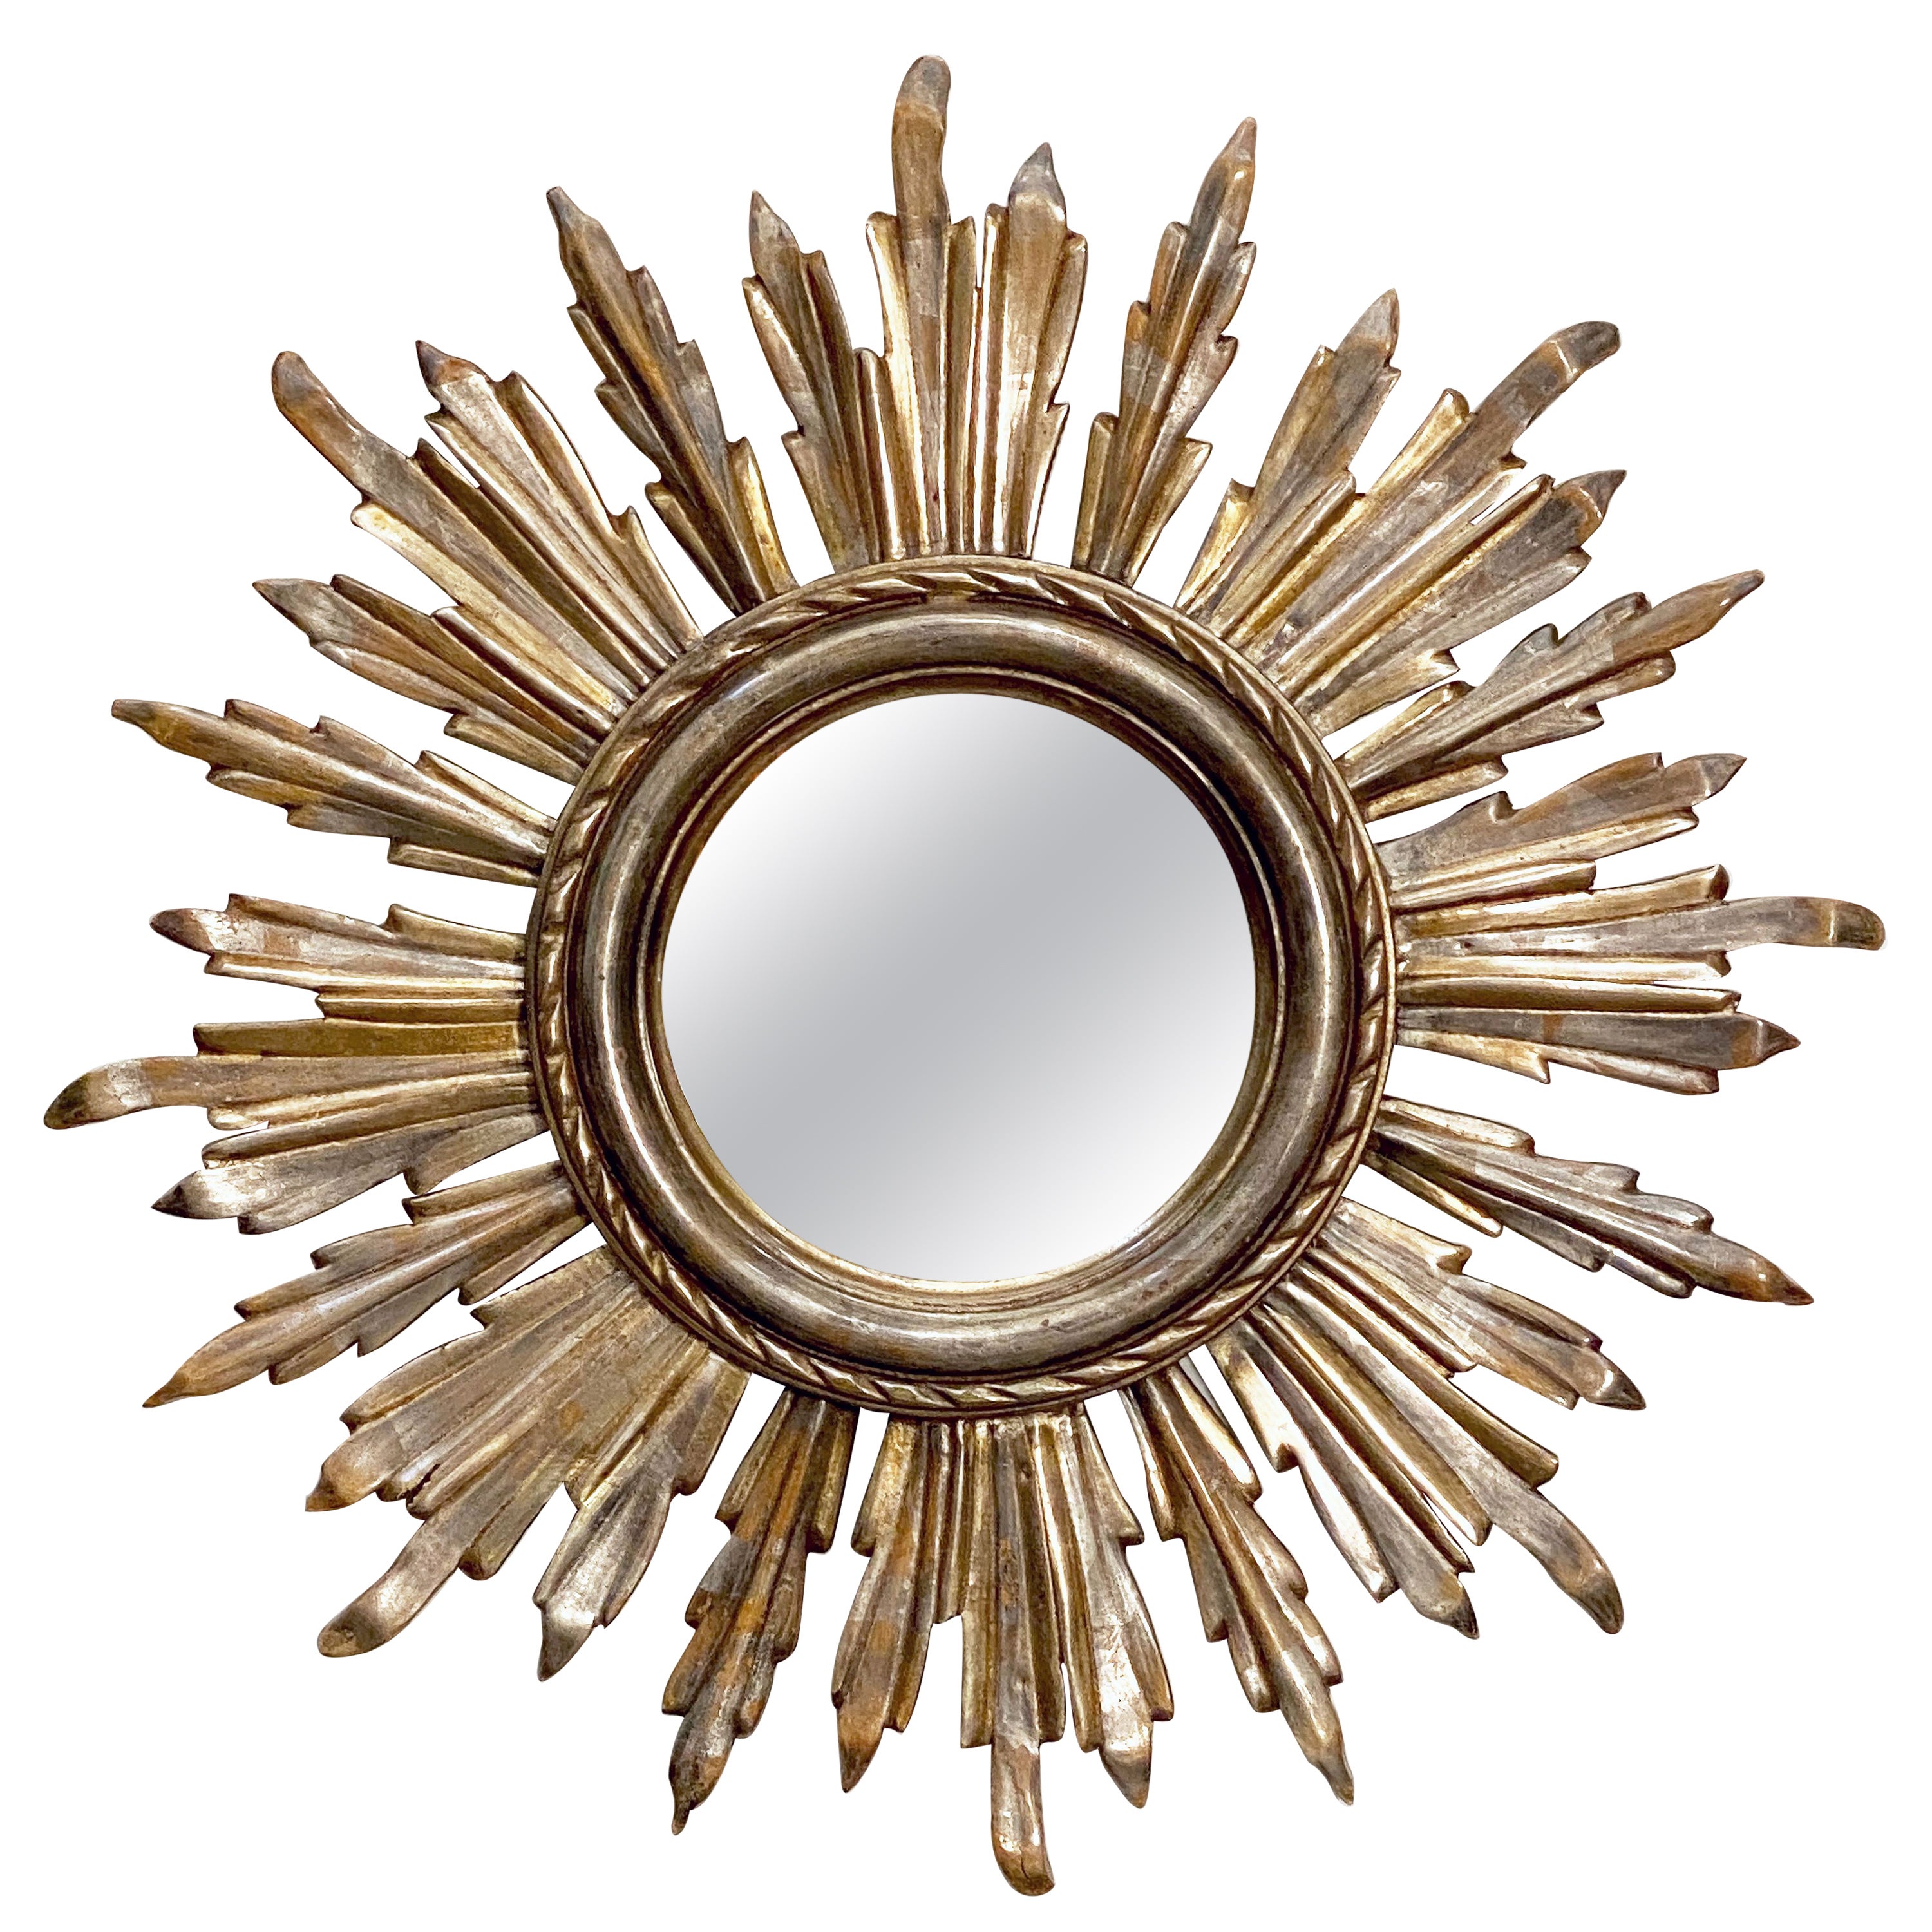 French Gold and Silver Gilt Starburst or Sunburst Mirror (Diameter 21) For Sale